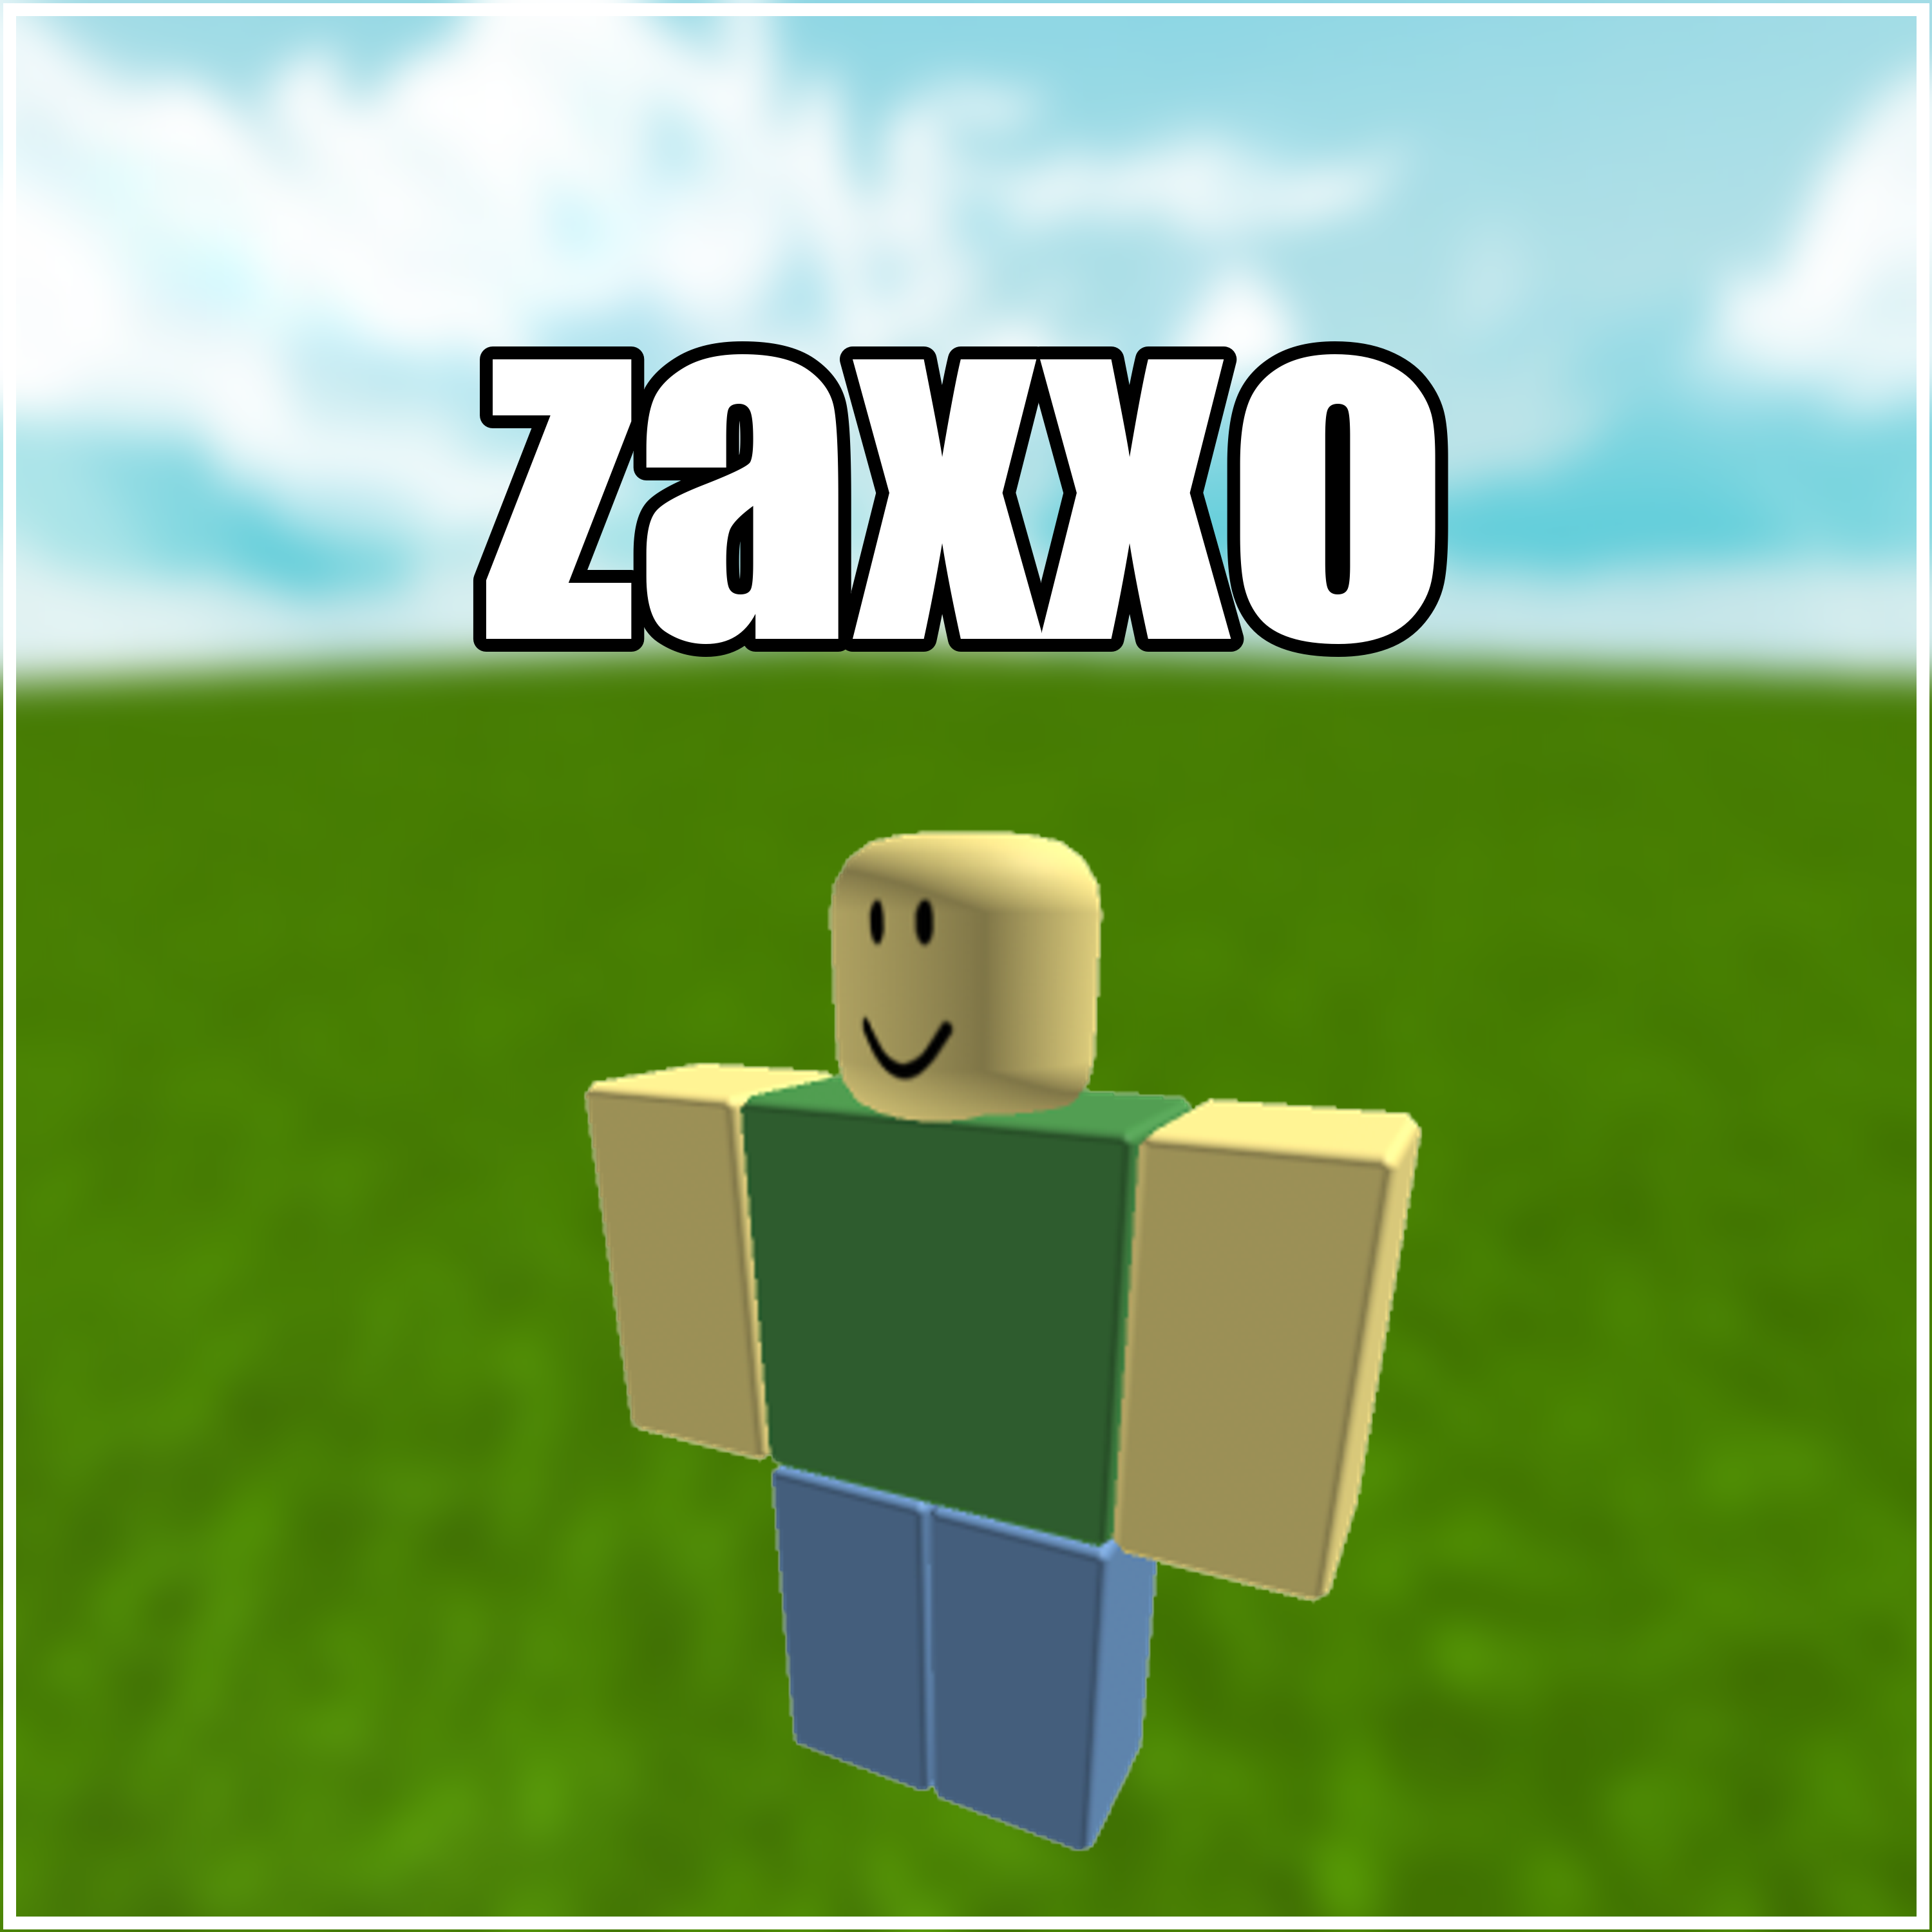 robruh RARE username "zaxxo" ROBLOX account guaranteed to be unverified!